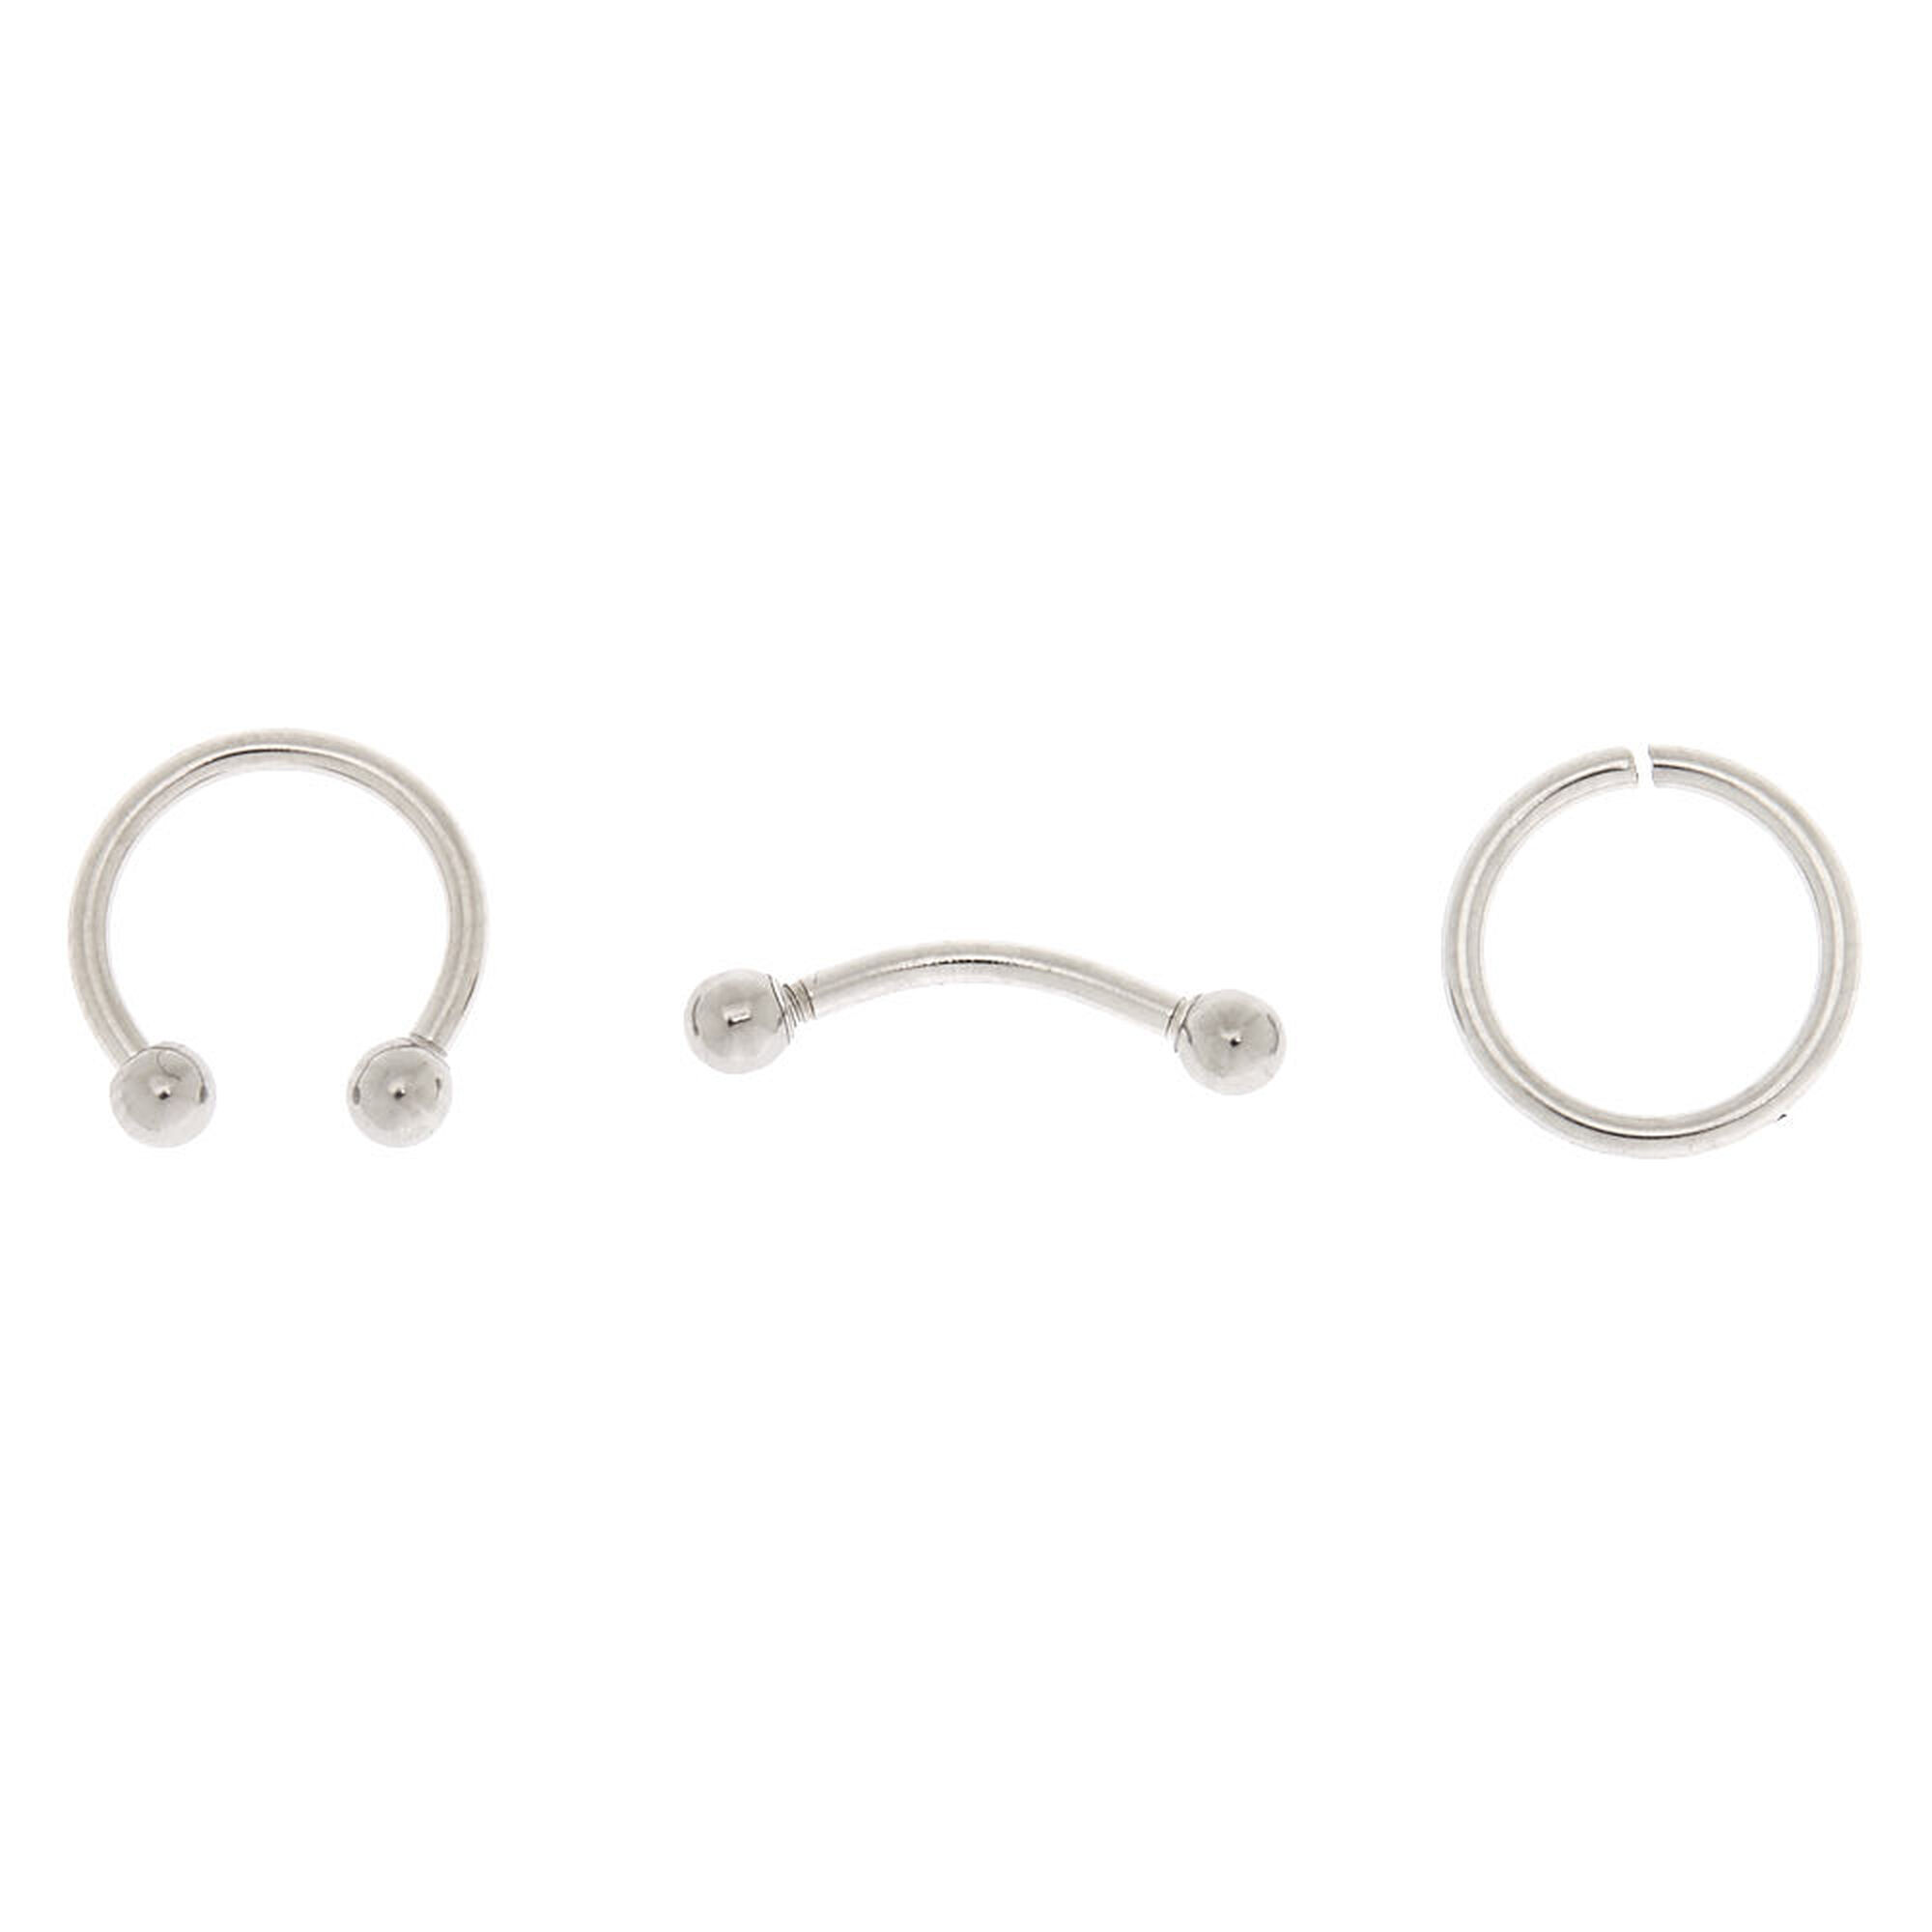 Silver 22G Rook Stud & Hoop Earrings - 3 Pack | Claire's